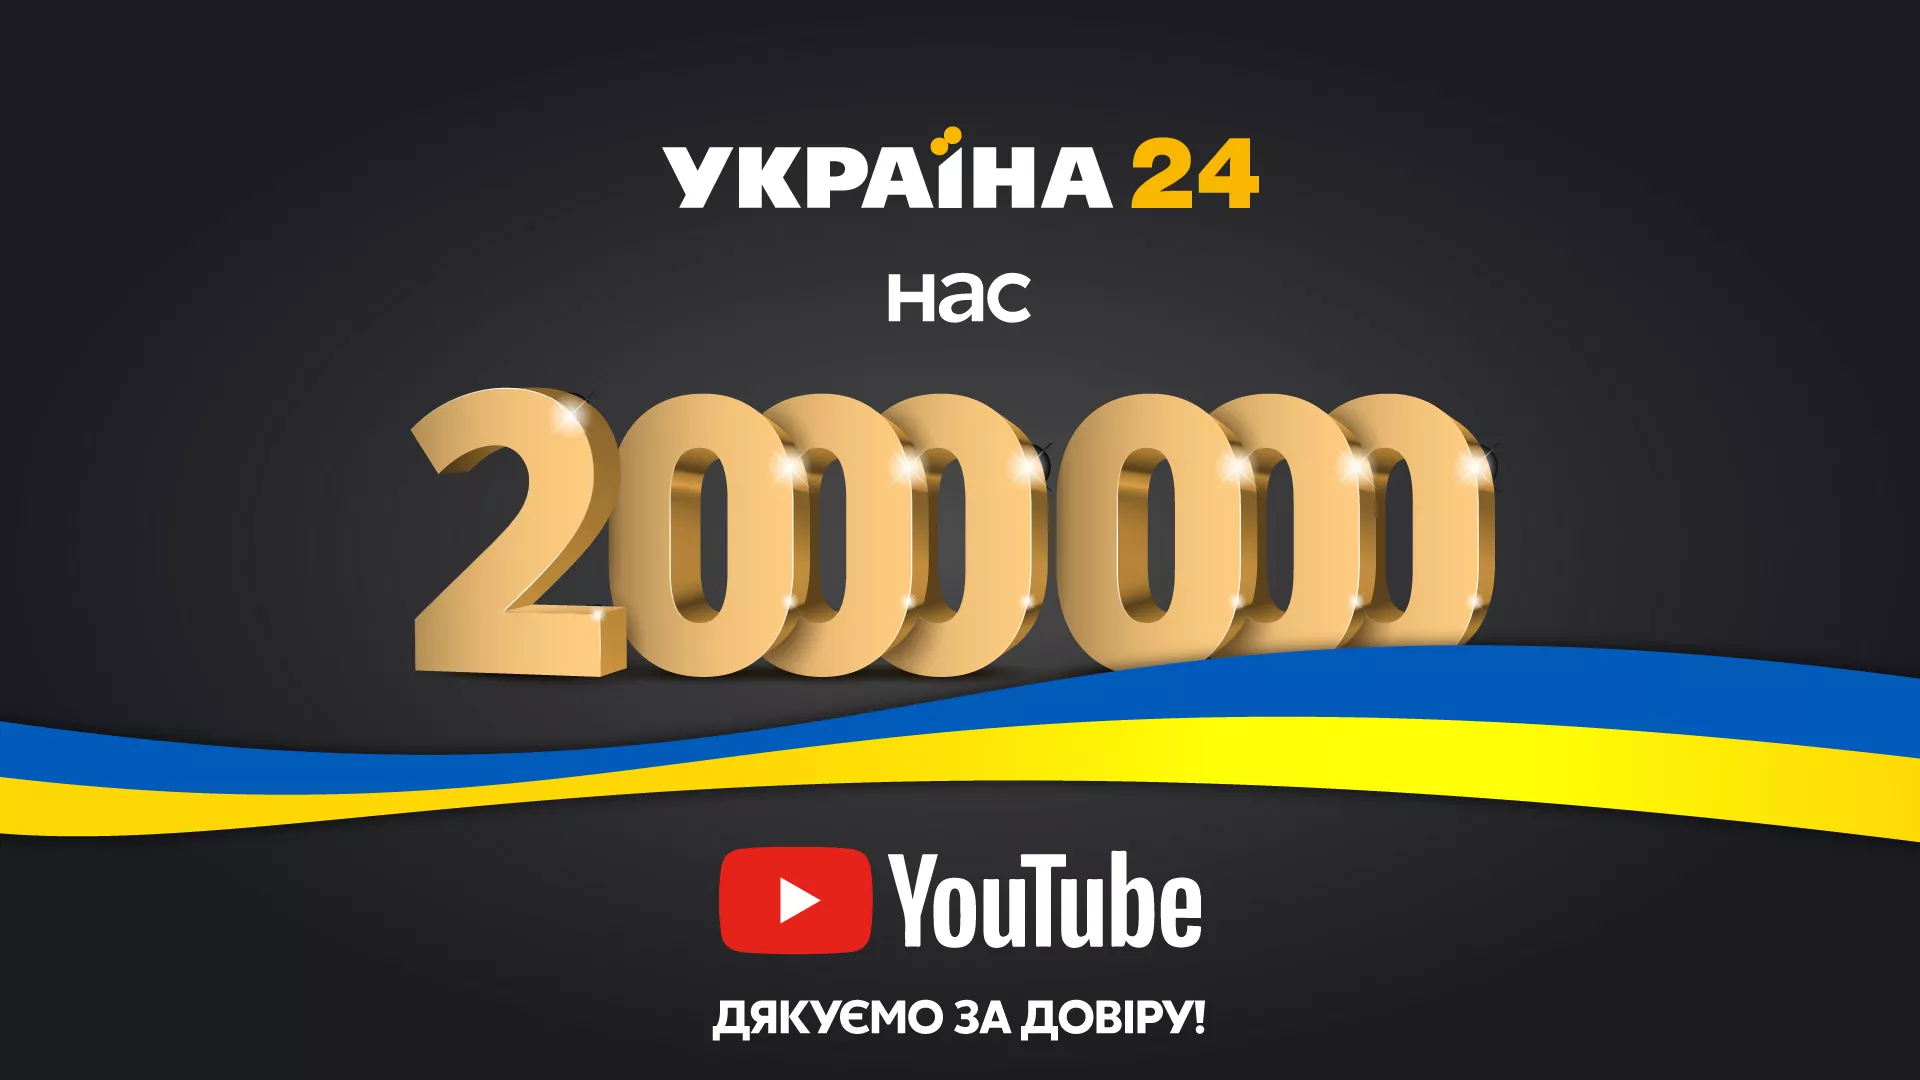 Украина 24 youtube. Украина 24 ютуб. Украинские Телеканалы. 24 Канал Украина ютуб. 2 Миллиона подписчиков на ютубе.